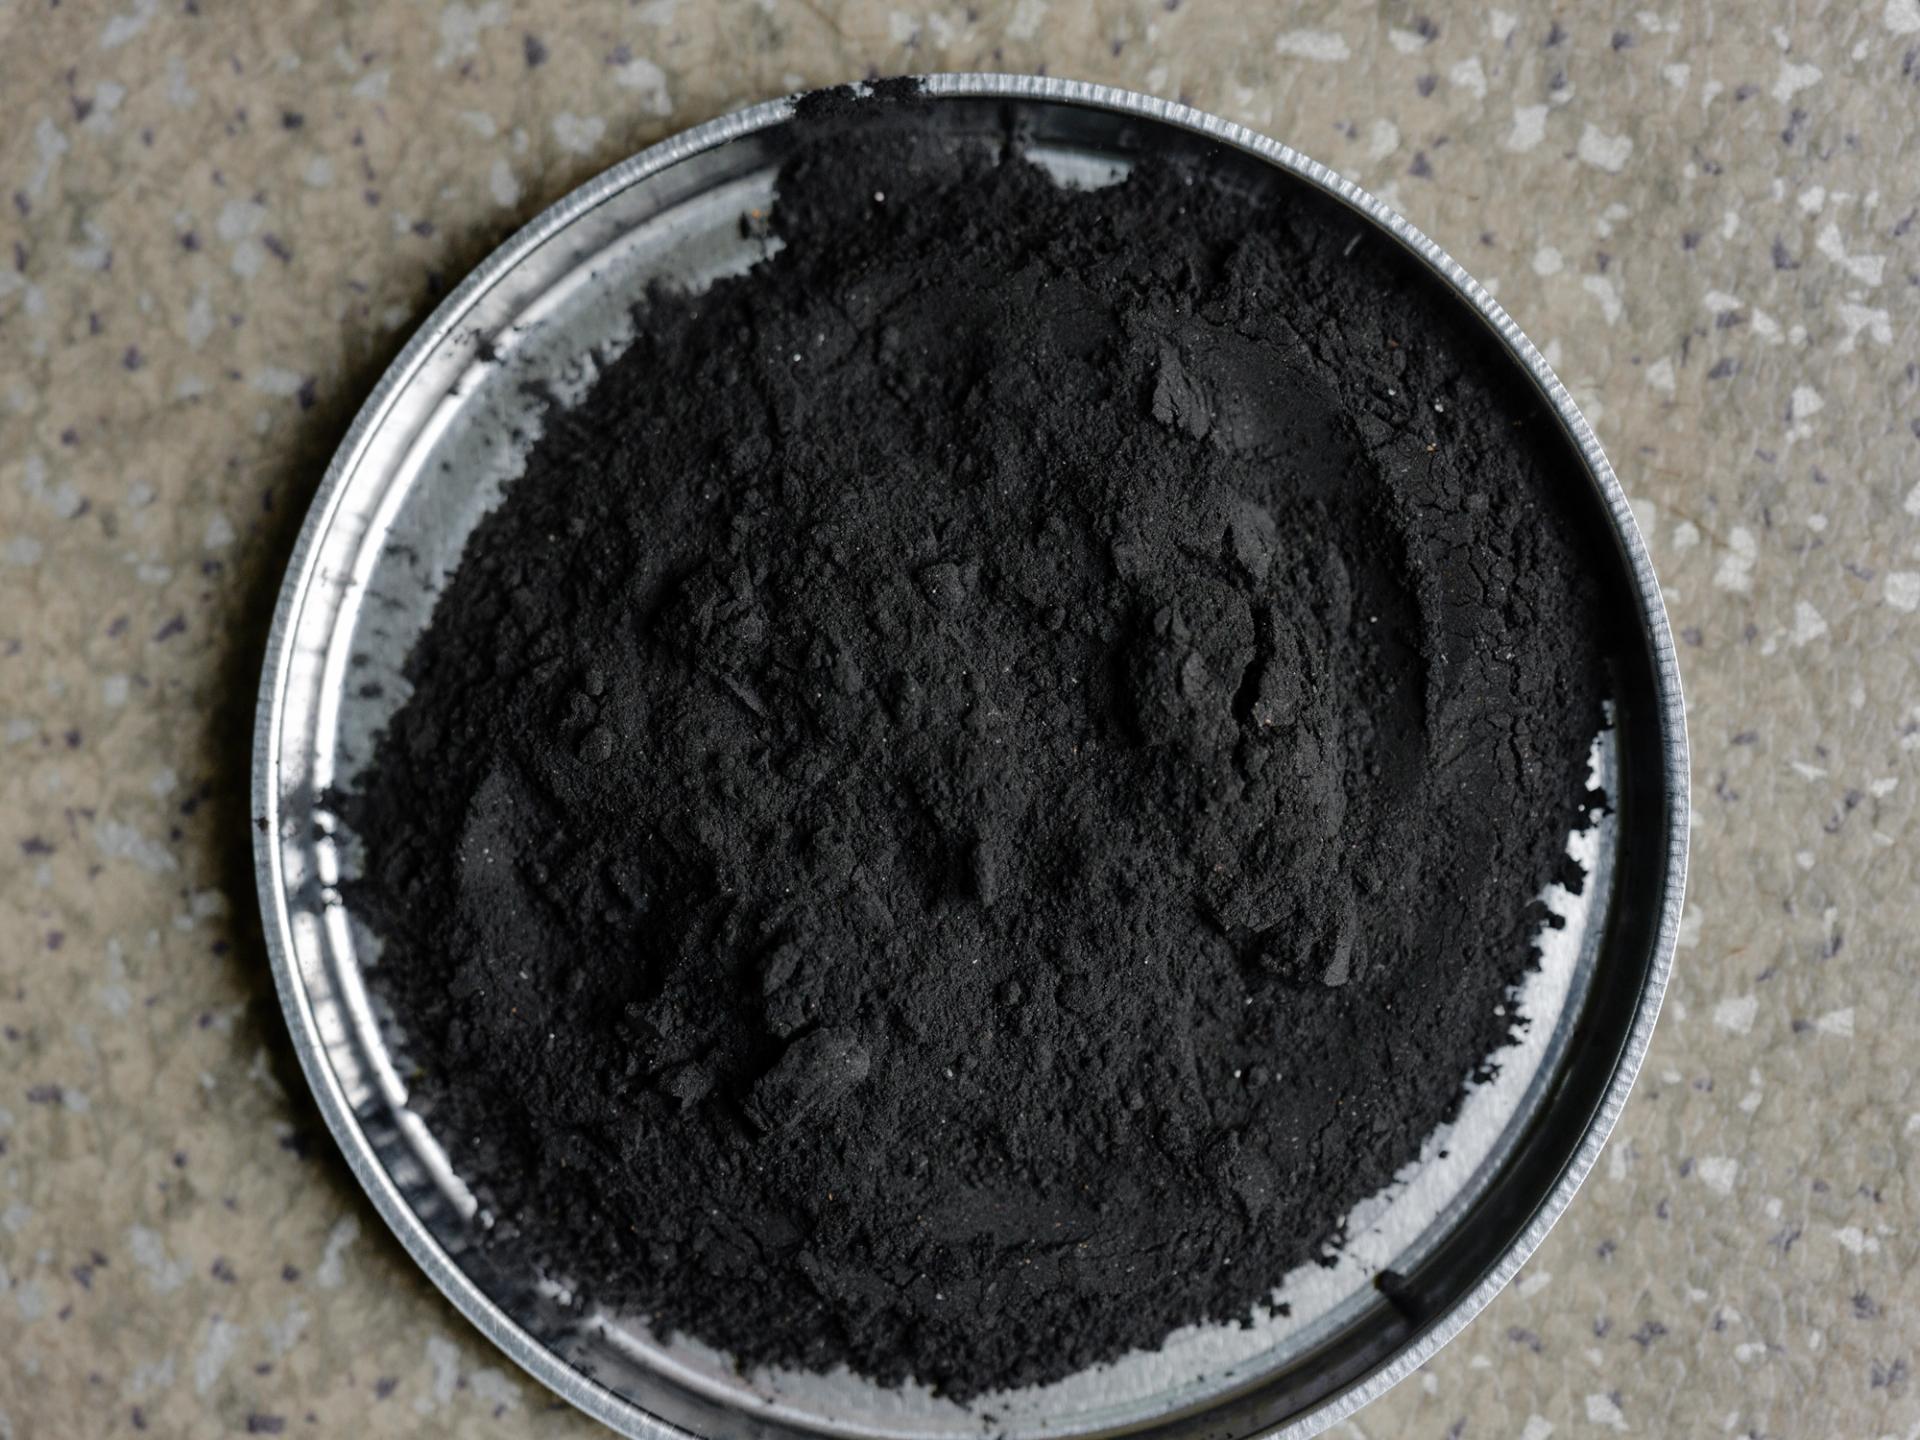 Black powder on a metal plate